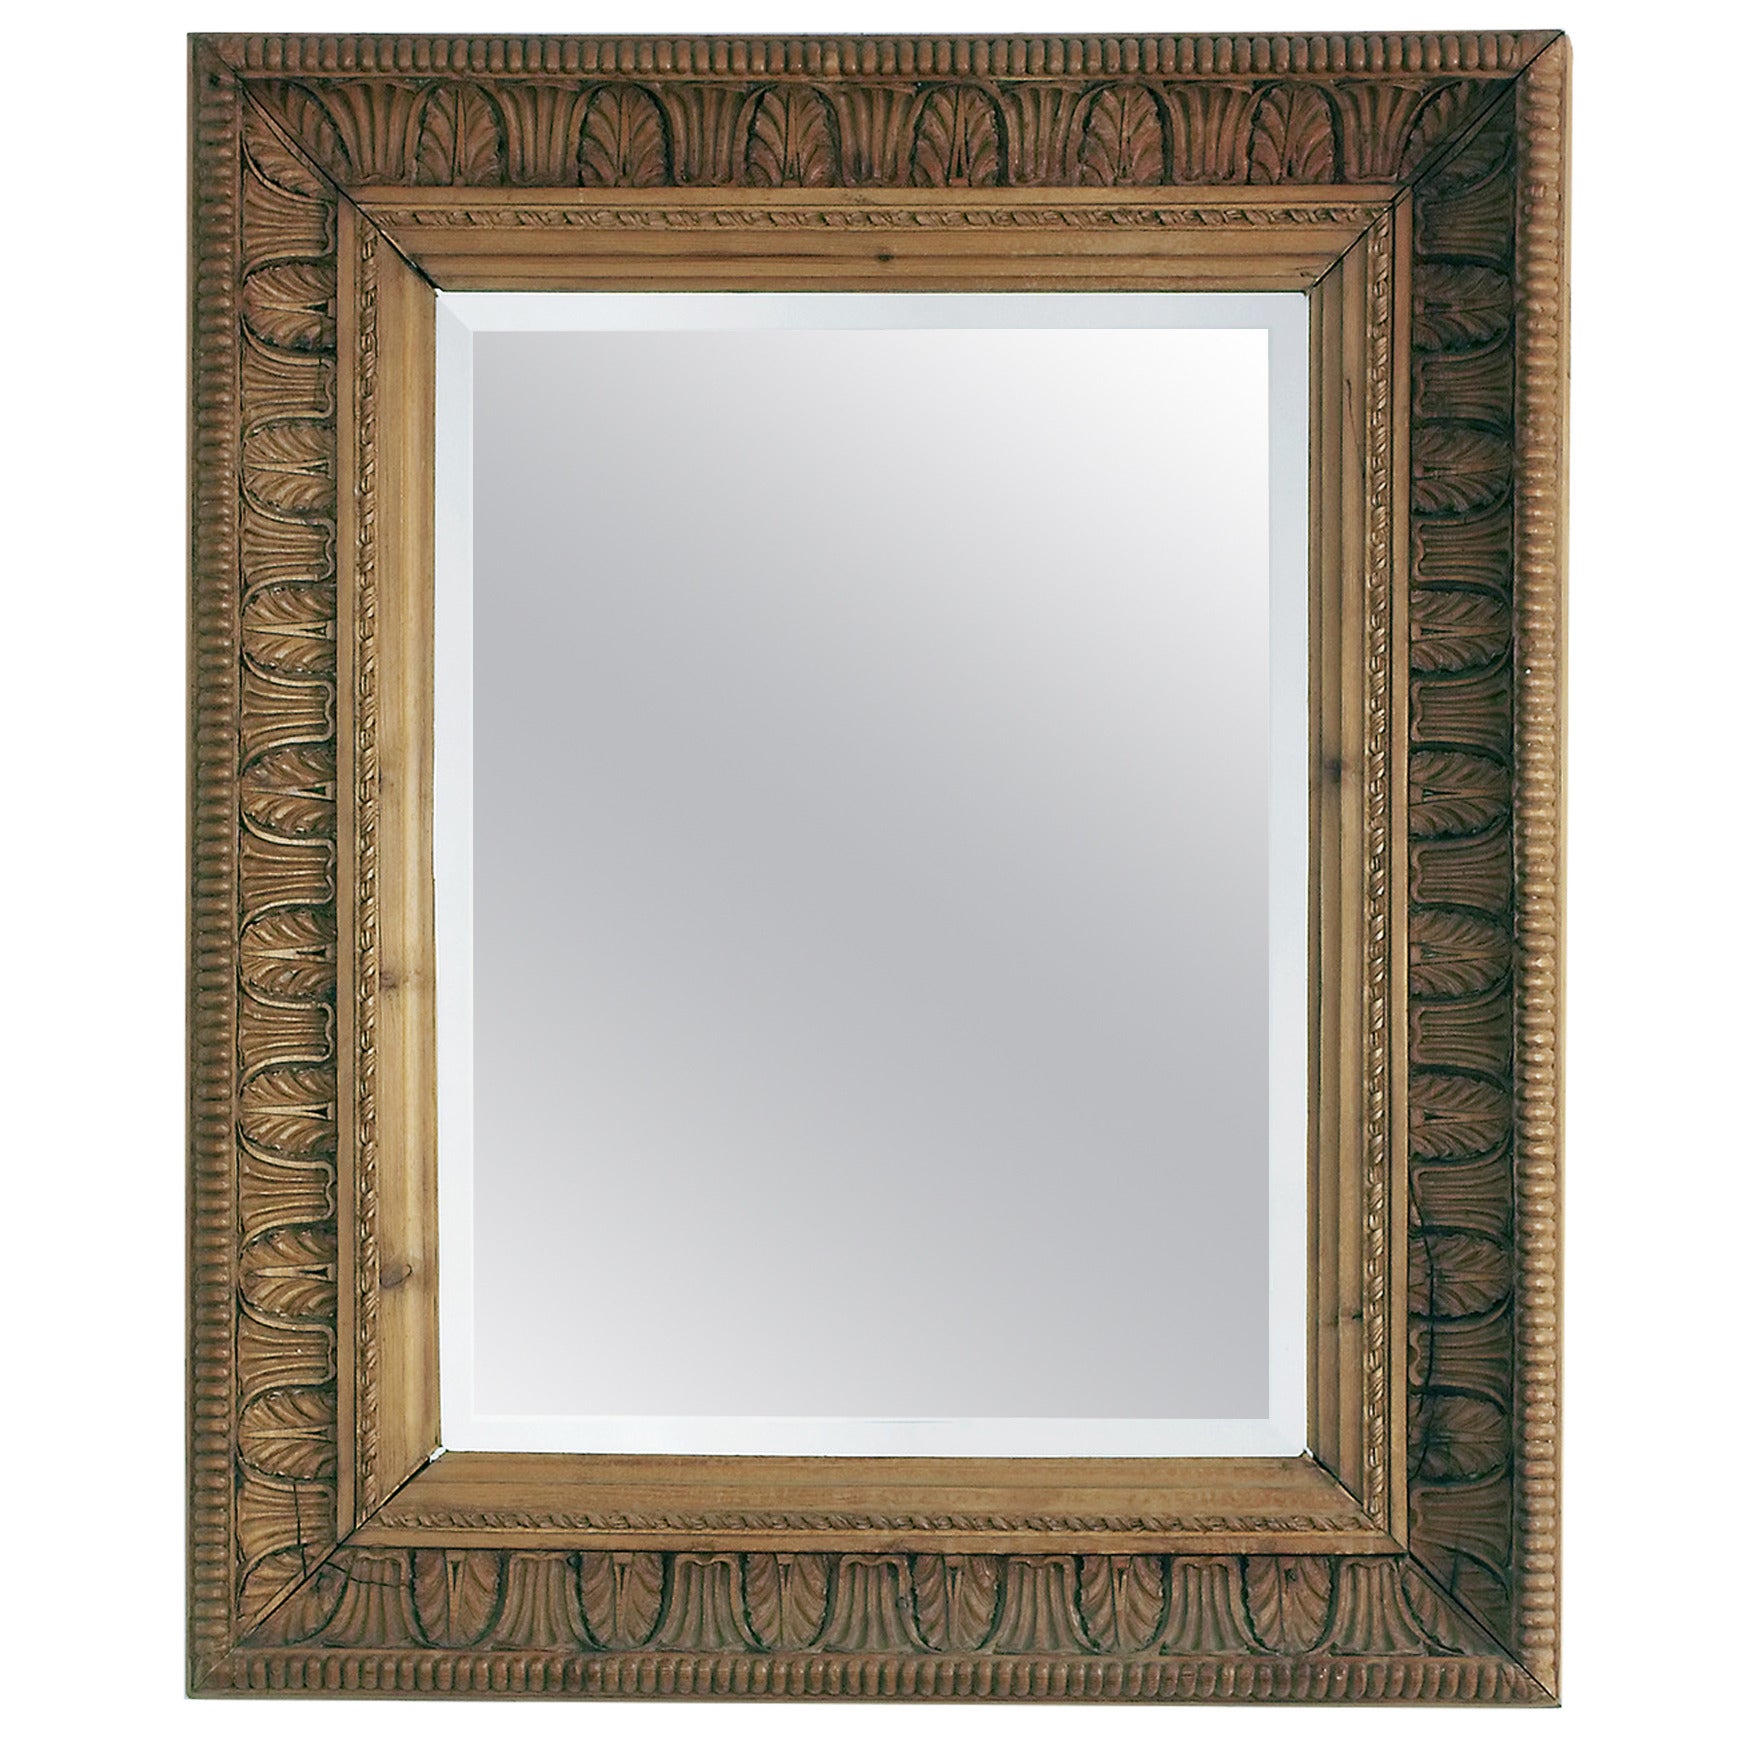 Irish Carved Pine Mirror with Bevel